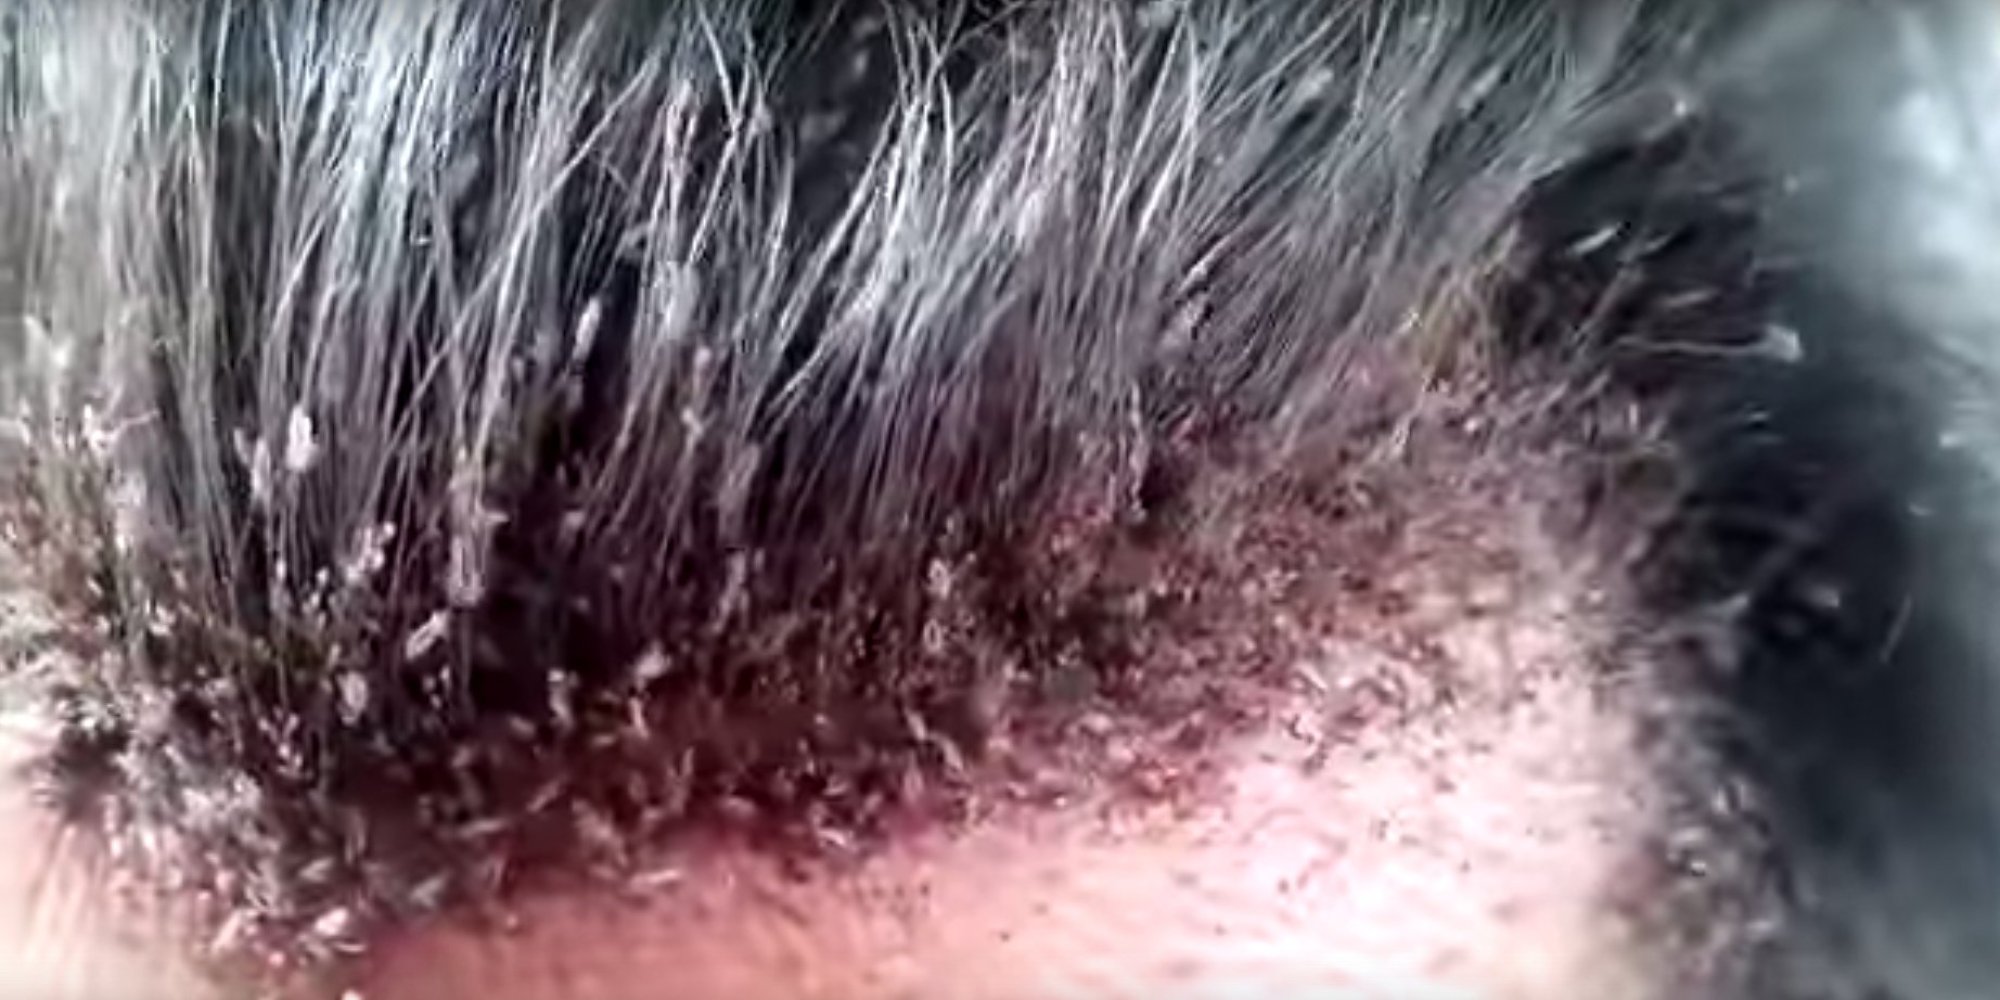 Head Lice Infestation Video Is So Gross You Shouldnt Watch It 